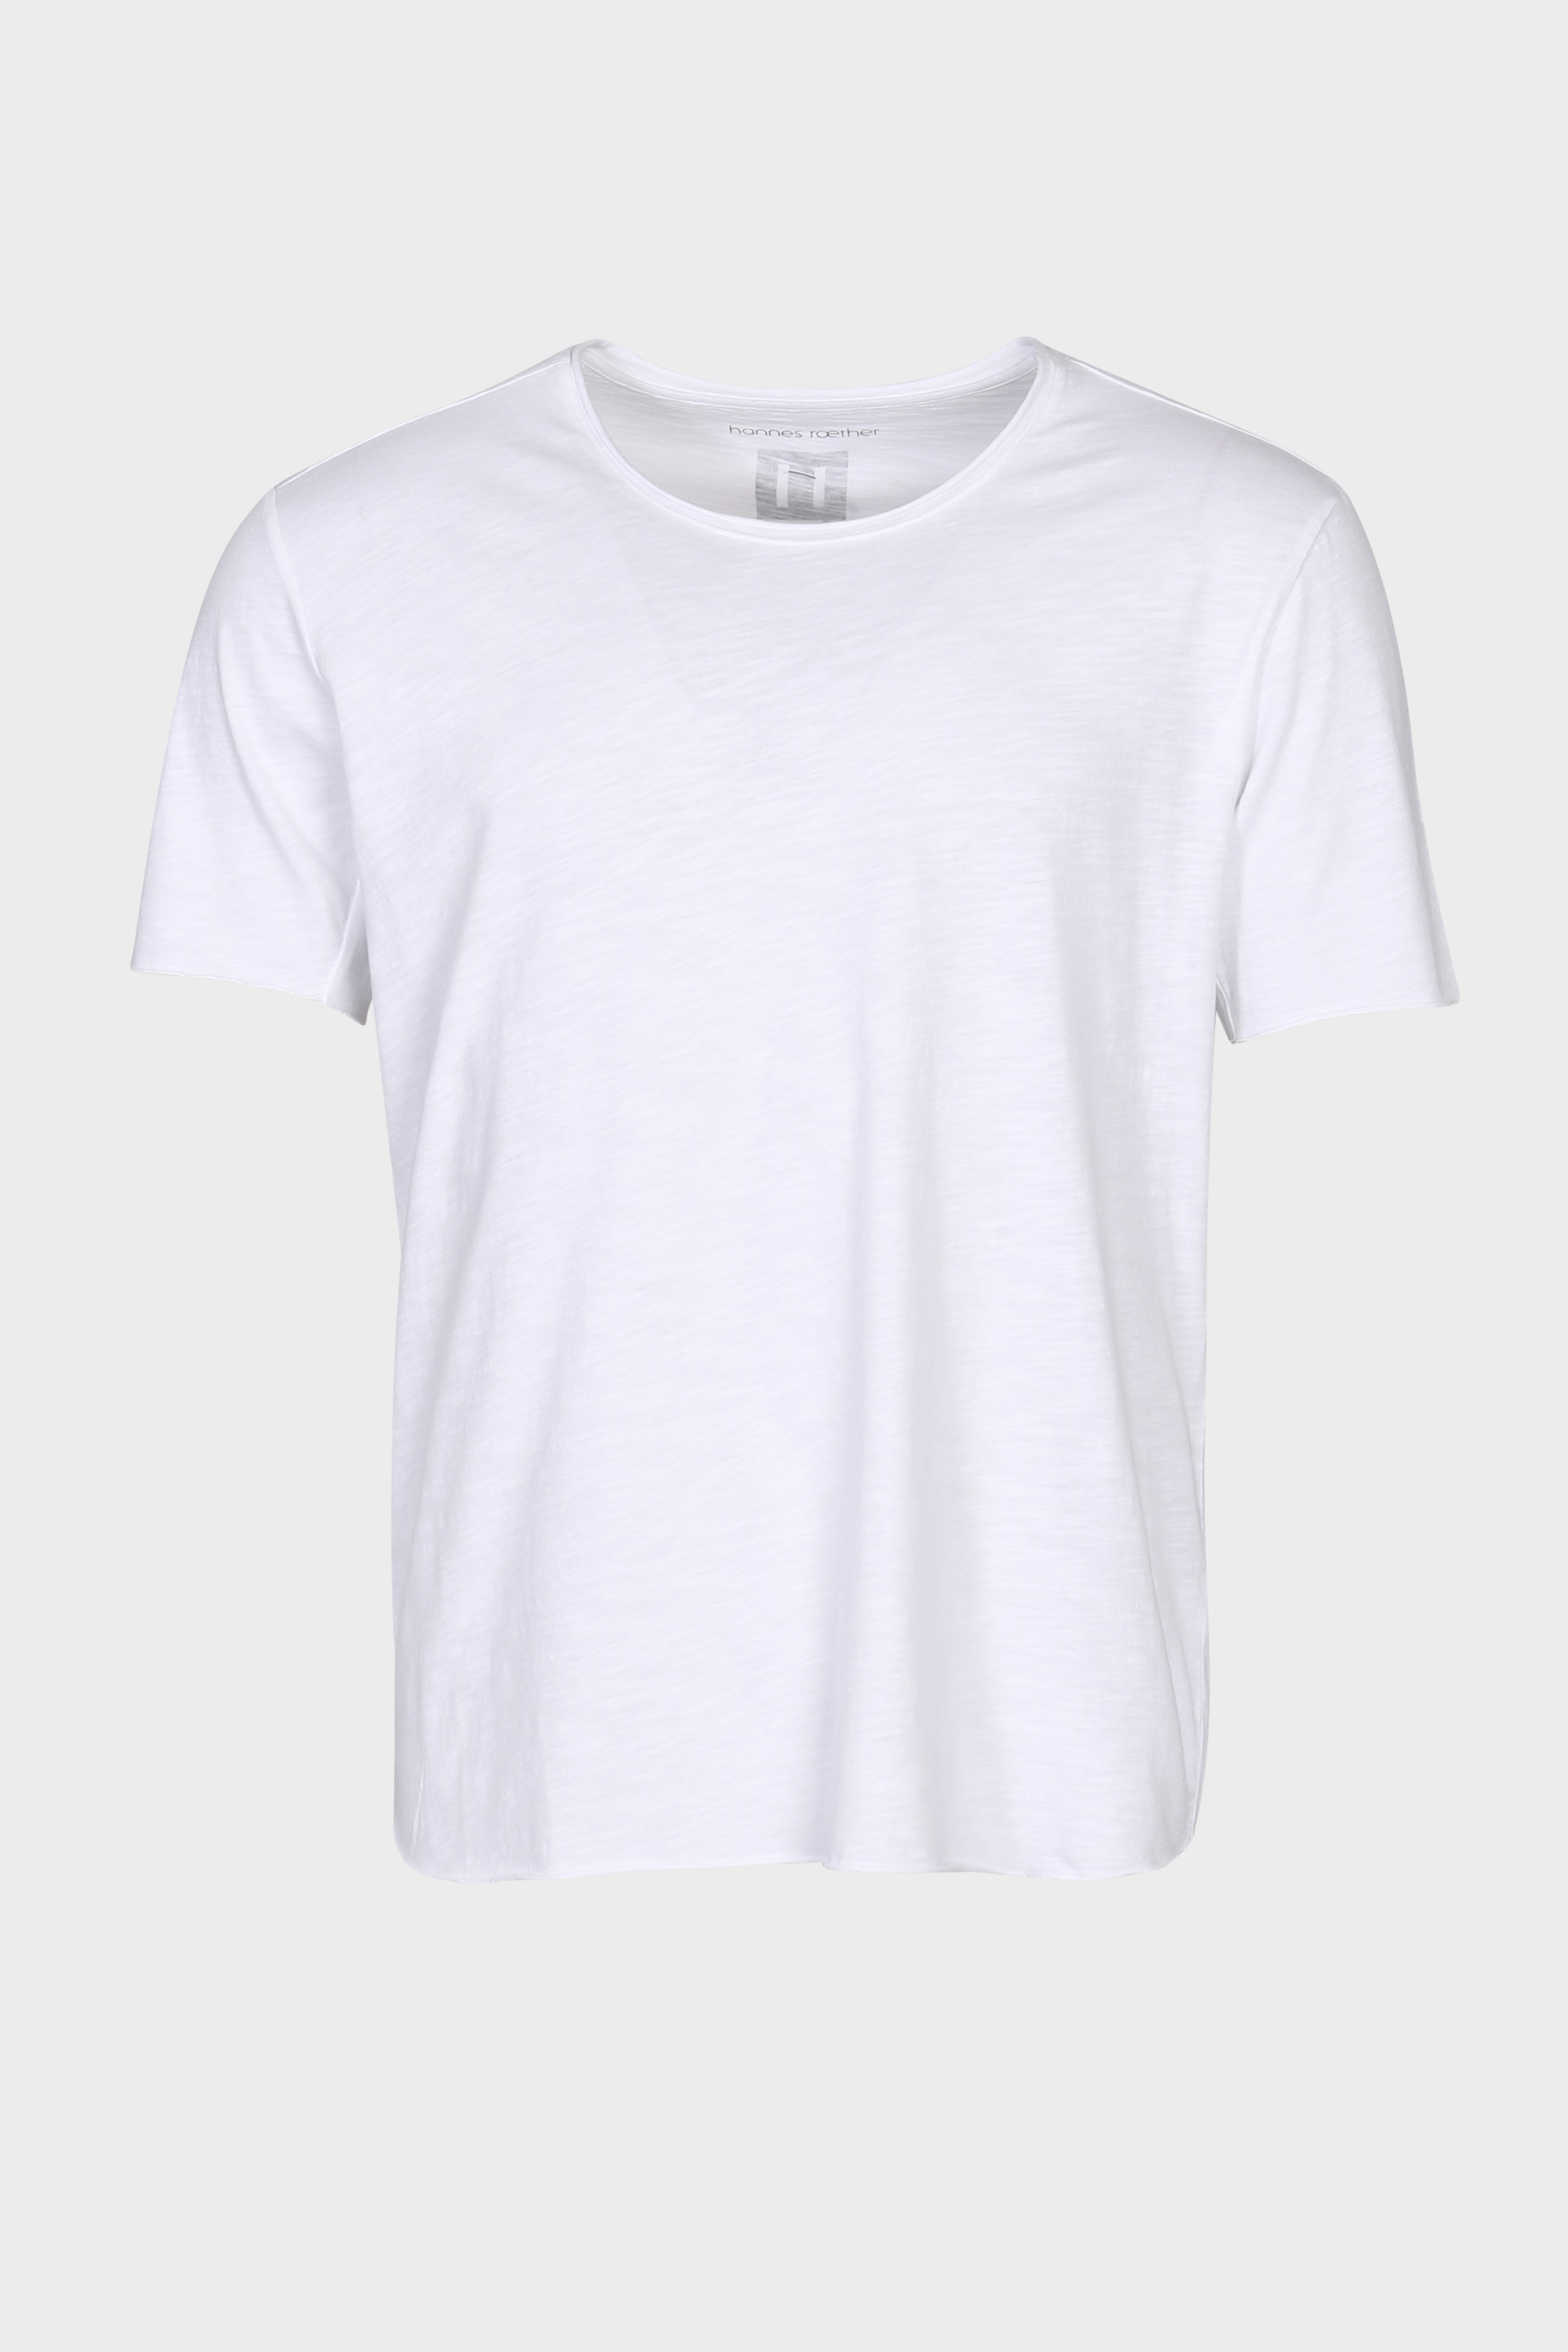 HANNES ROETHER Slub Yersey T-Shirt in White S